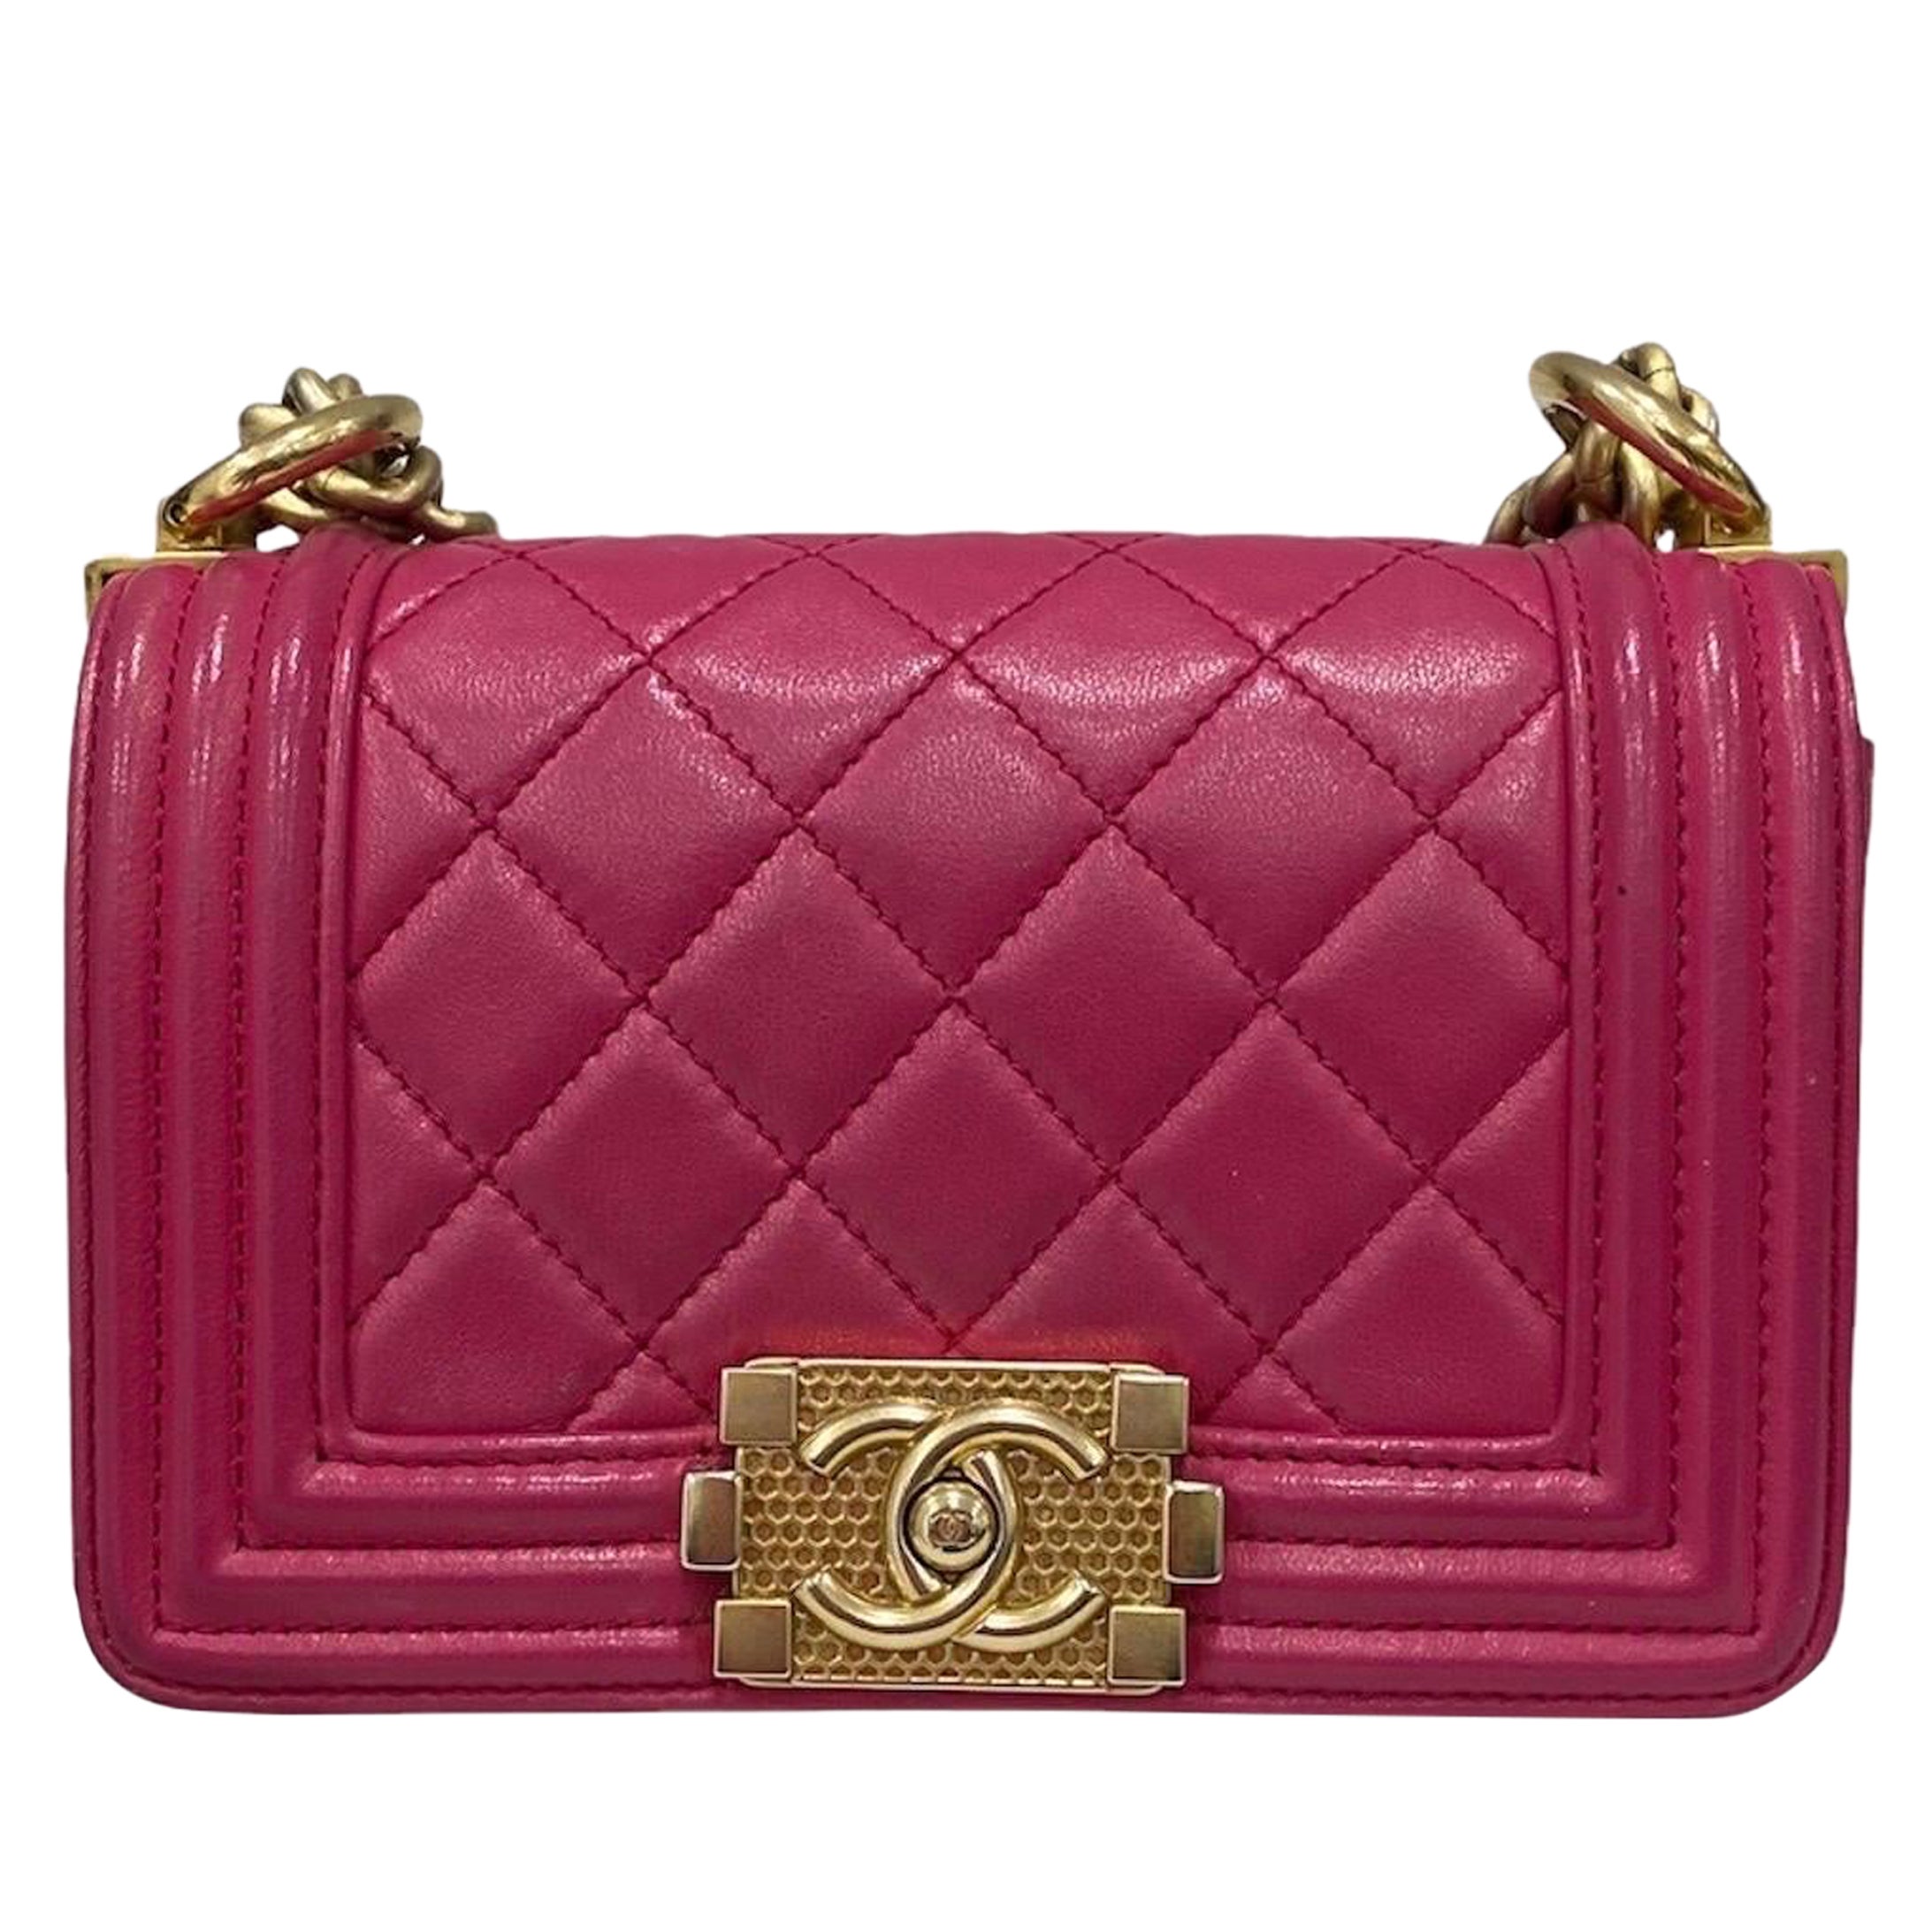 2017 Chanel Mini Boy Pink Small Shoulder Bag